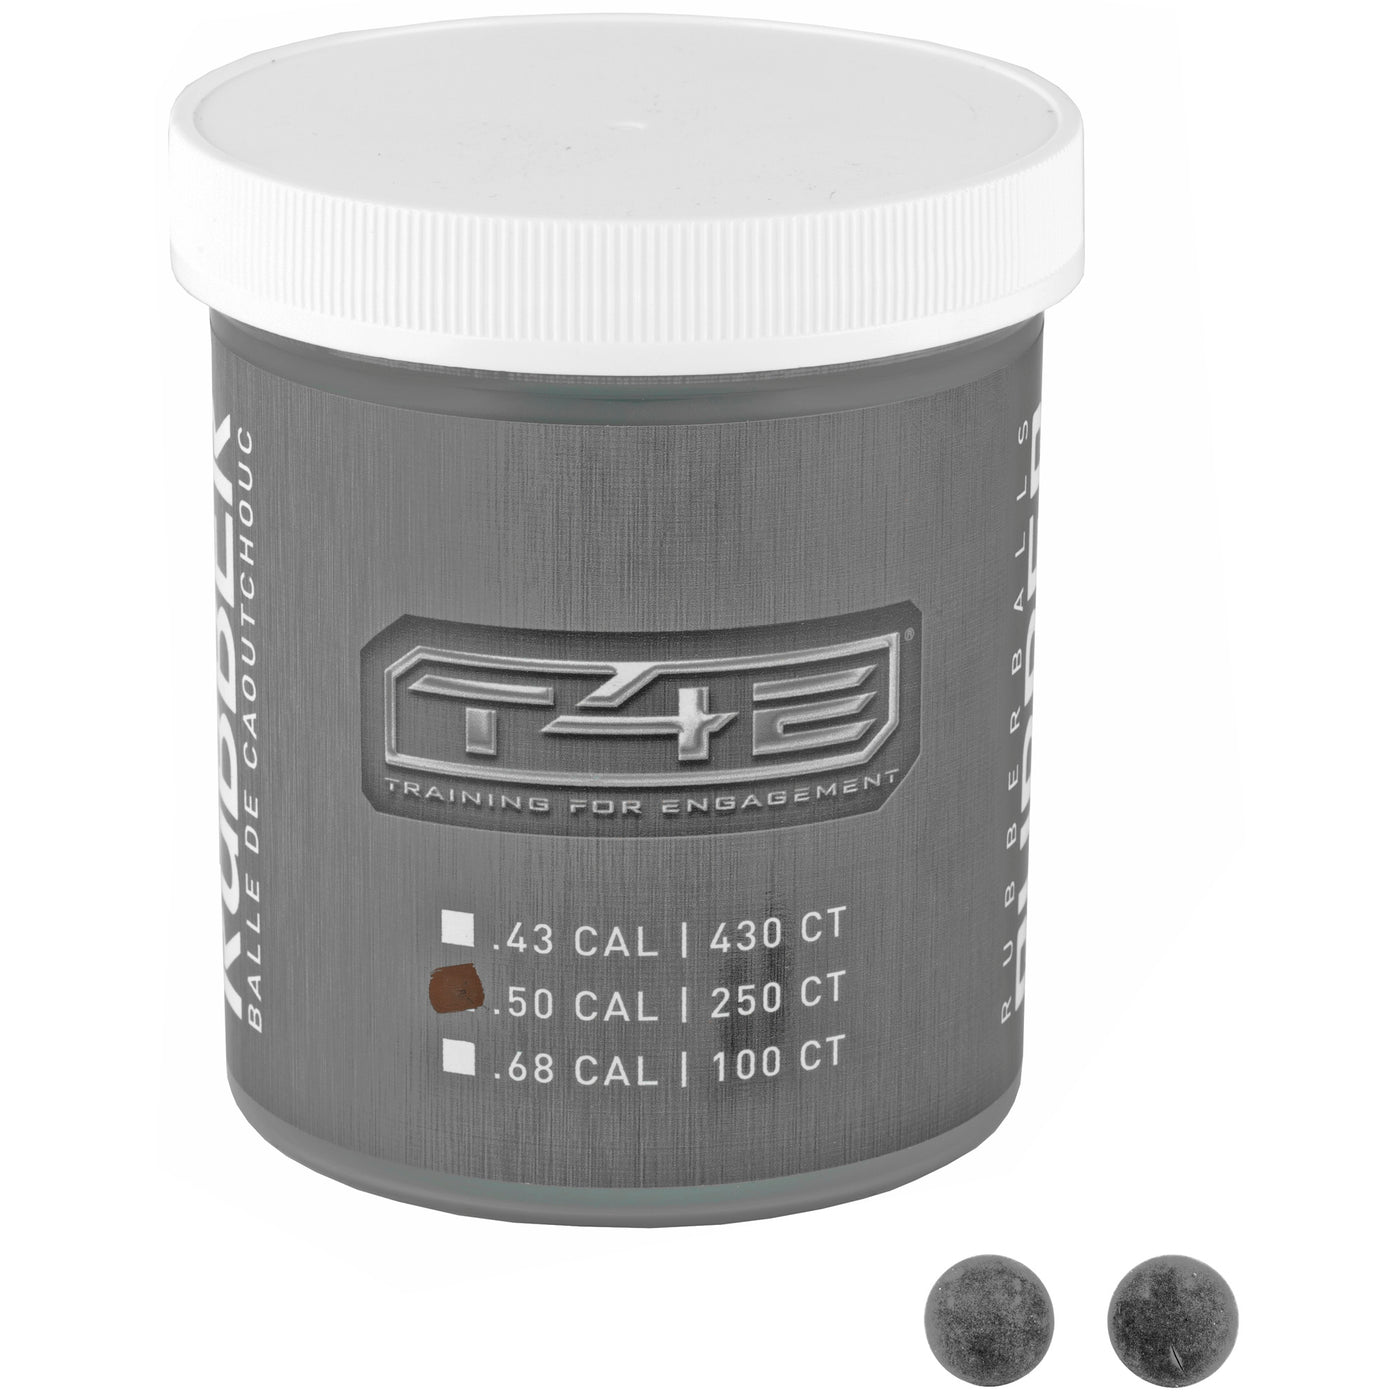 Umx T4e 50 Cal Rubber Ball 250ct Jar